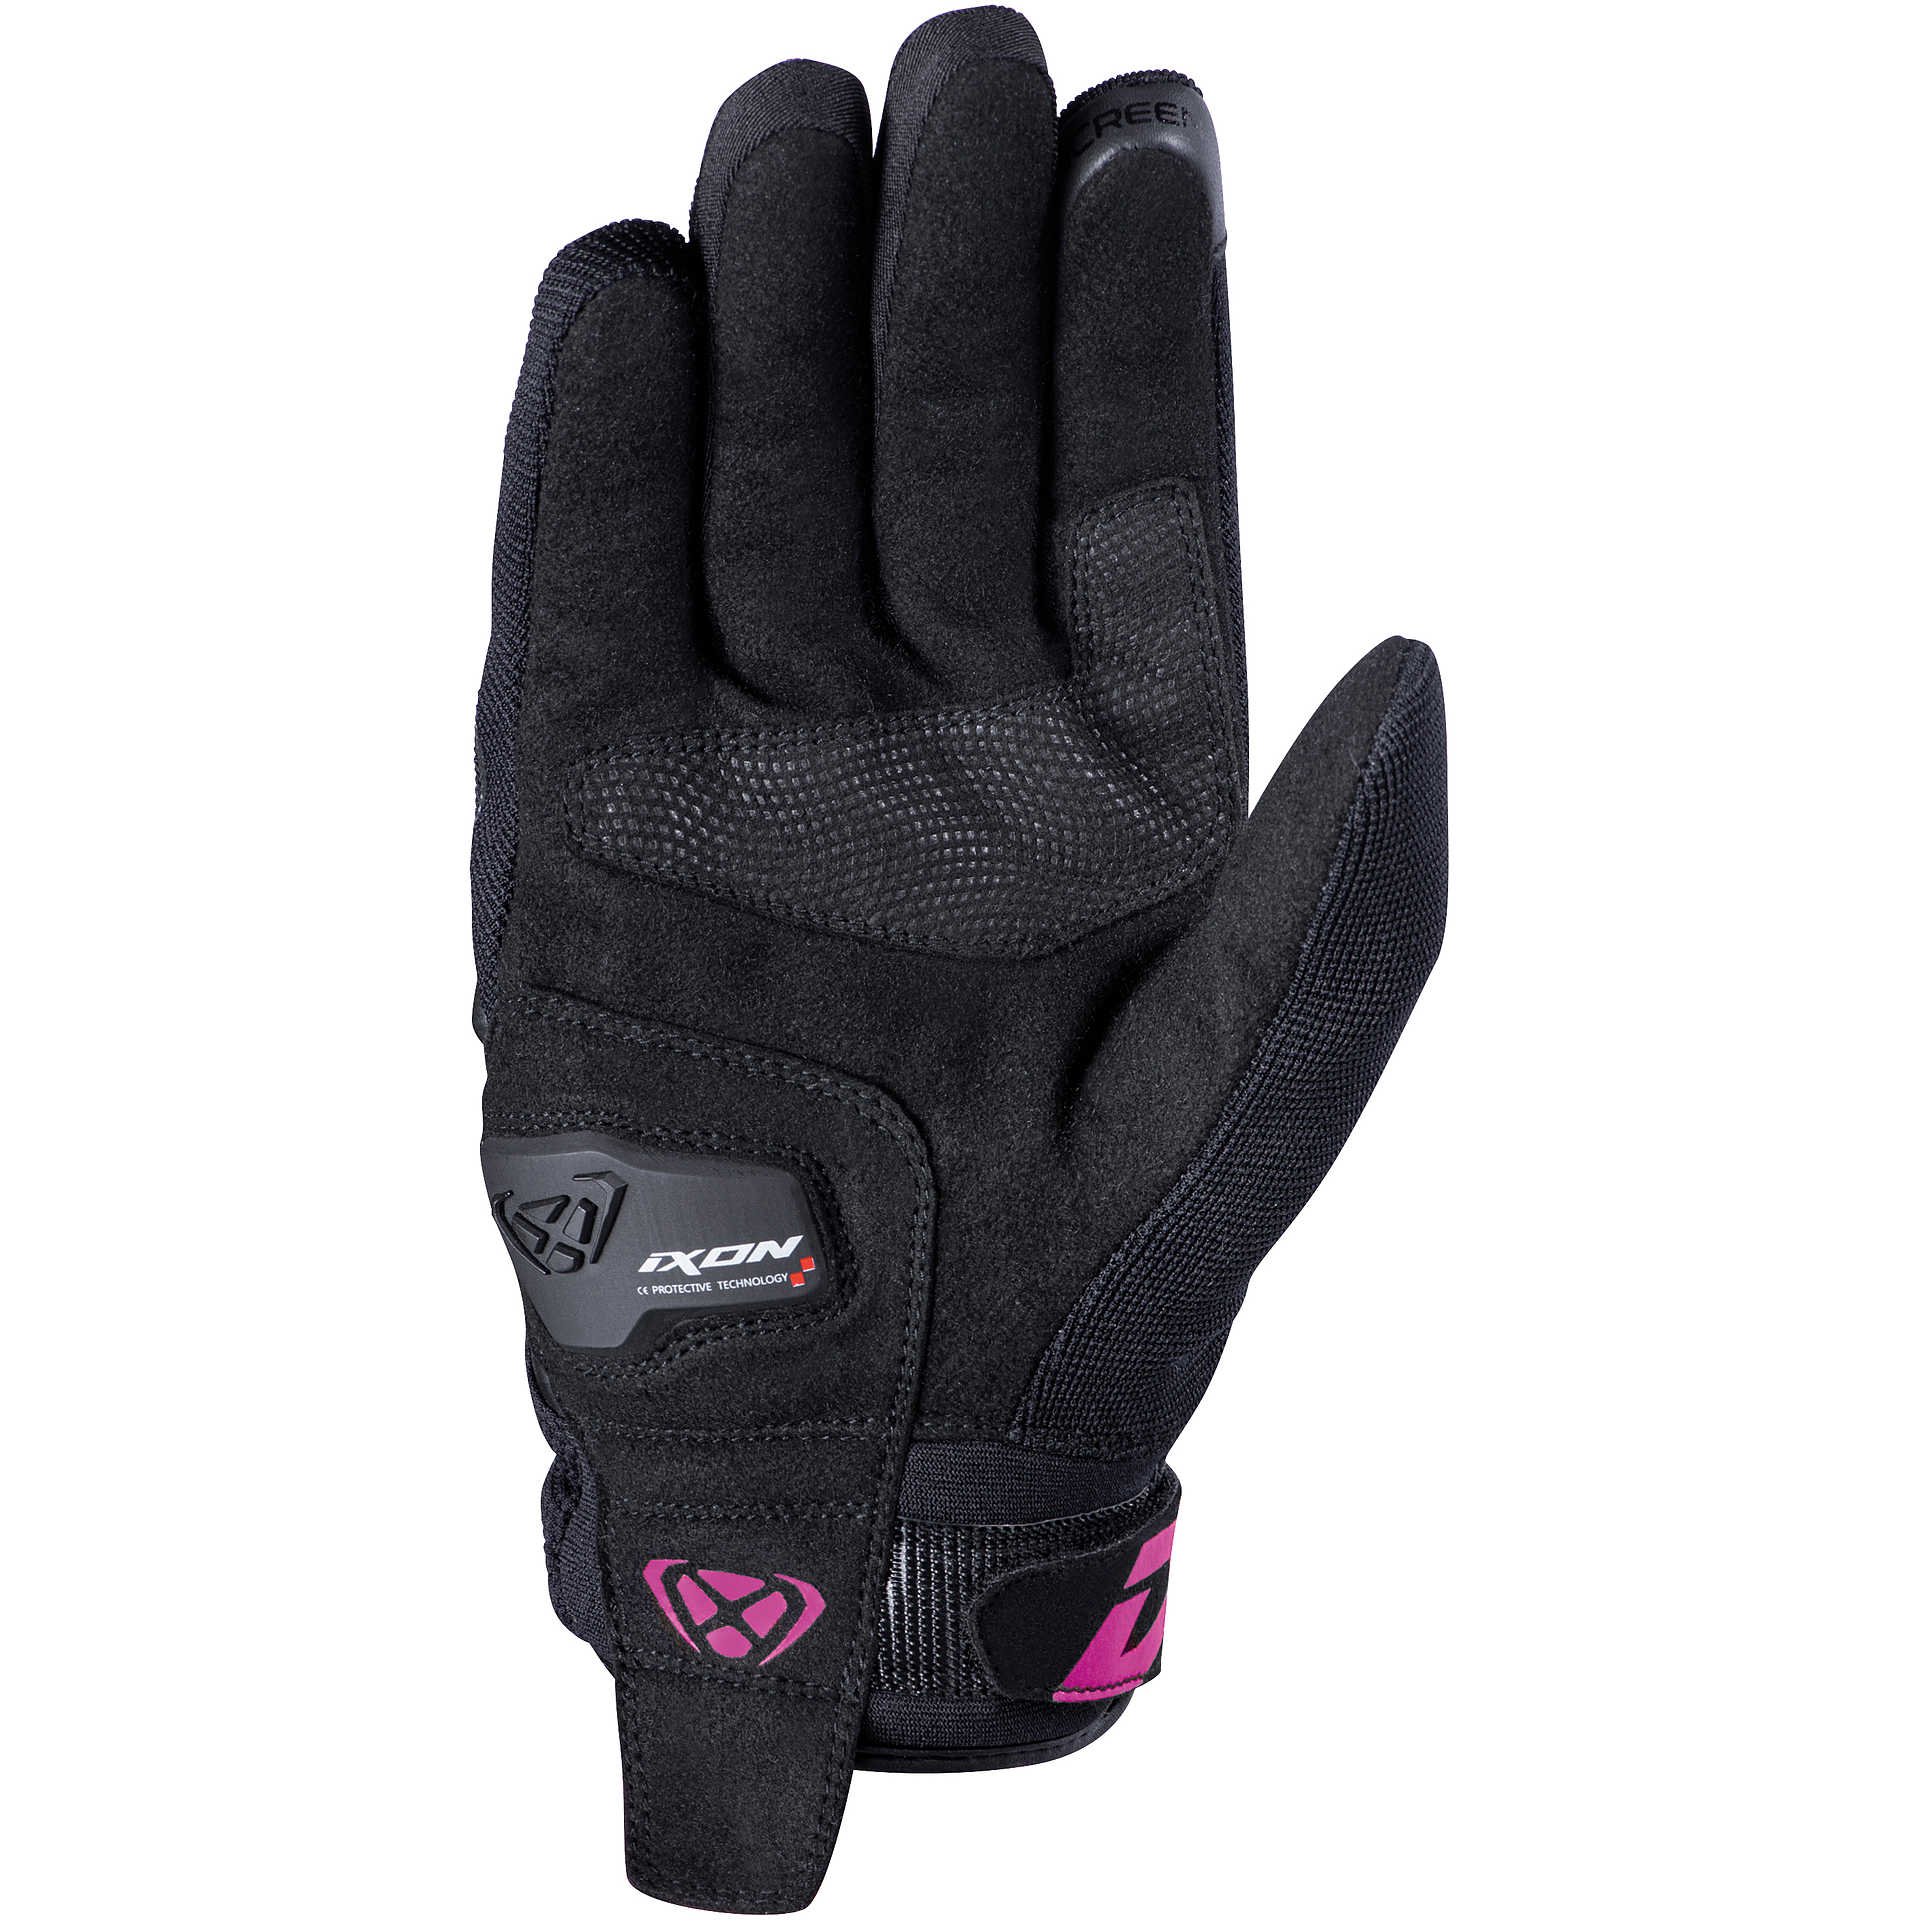 Gants hiver femme Ixon Pro Blast noir pink